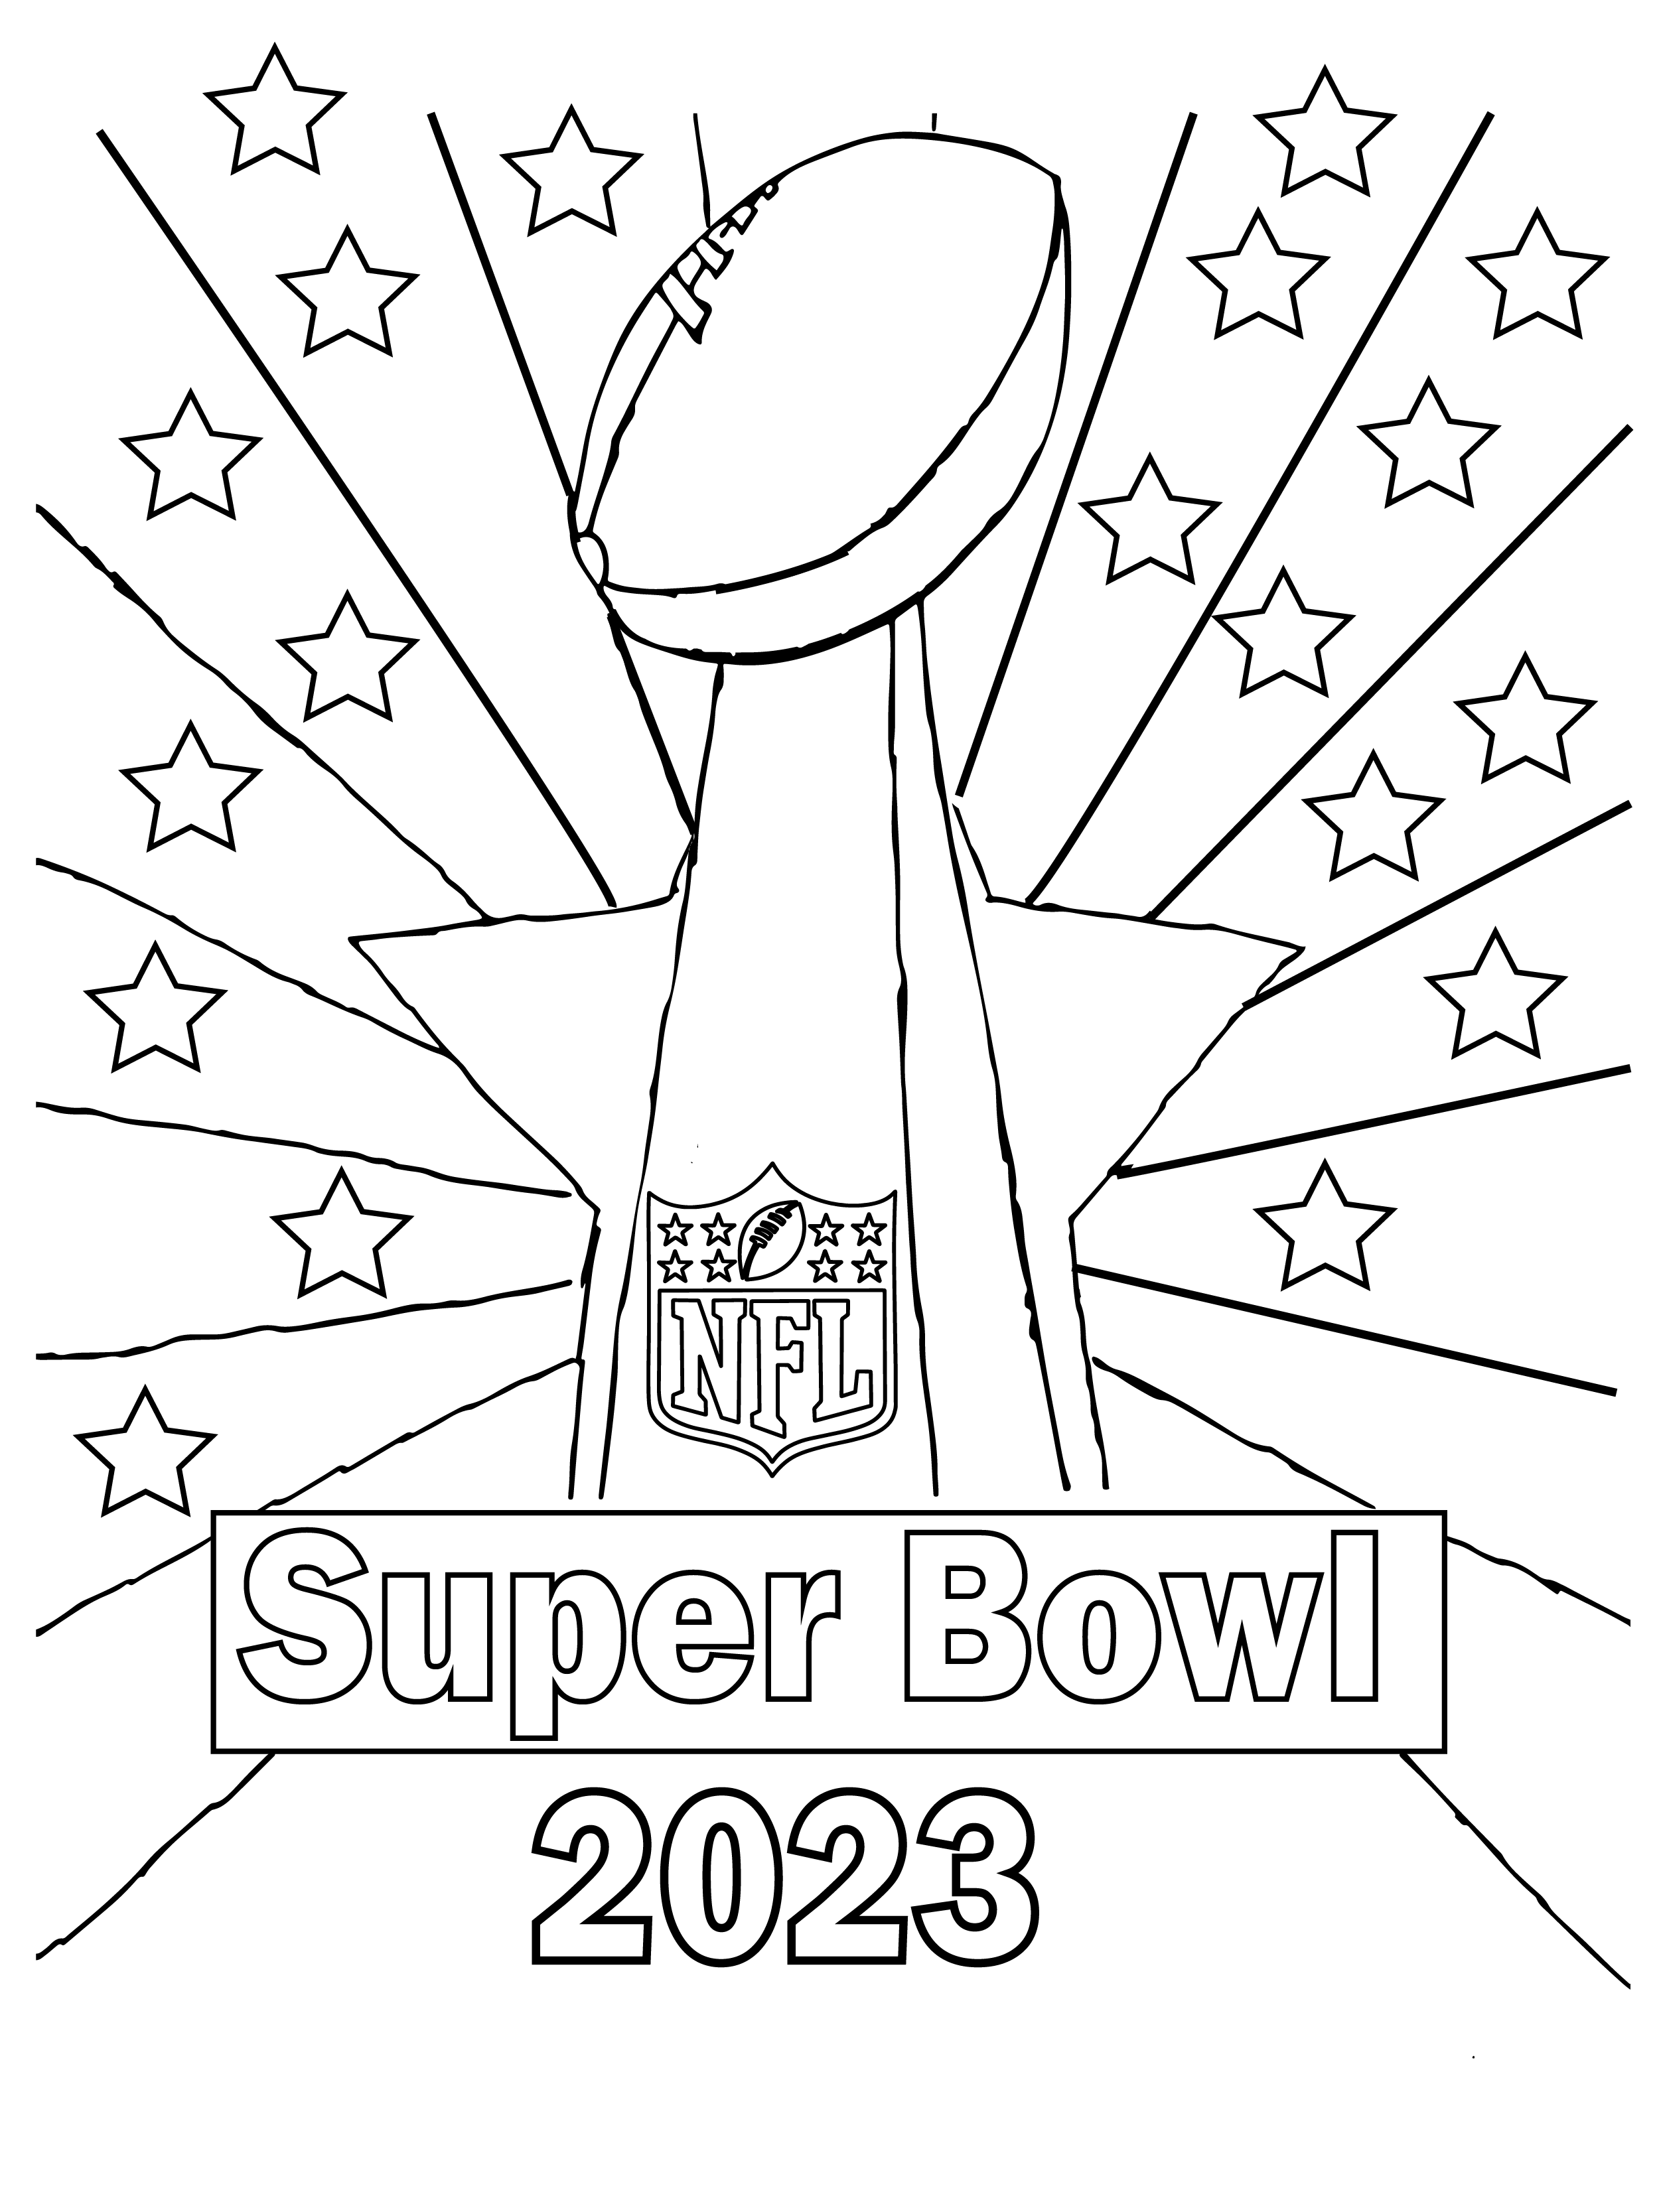 Enjoy Super Bowl 2023 coloring page